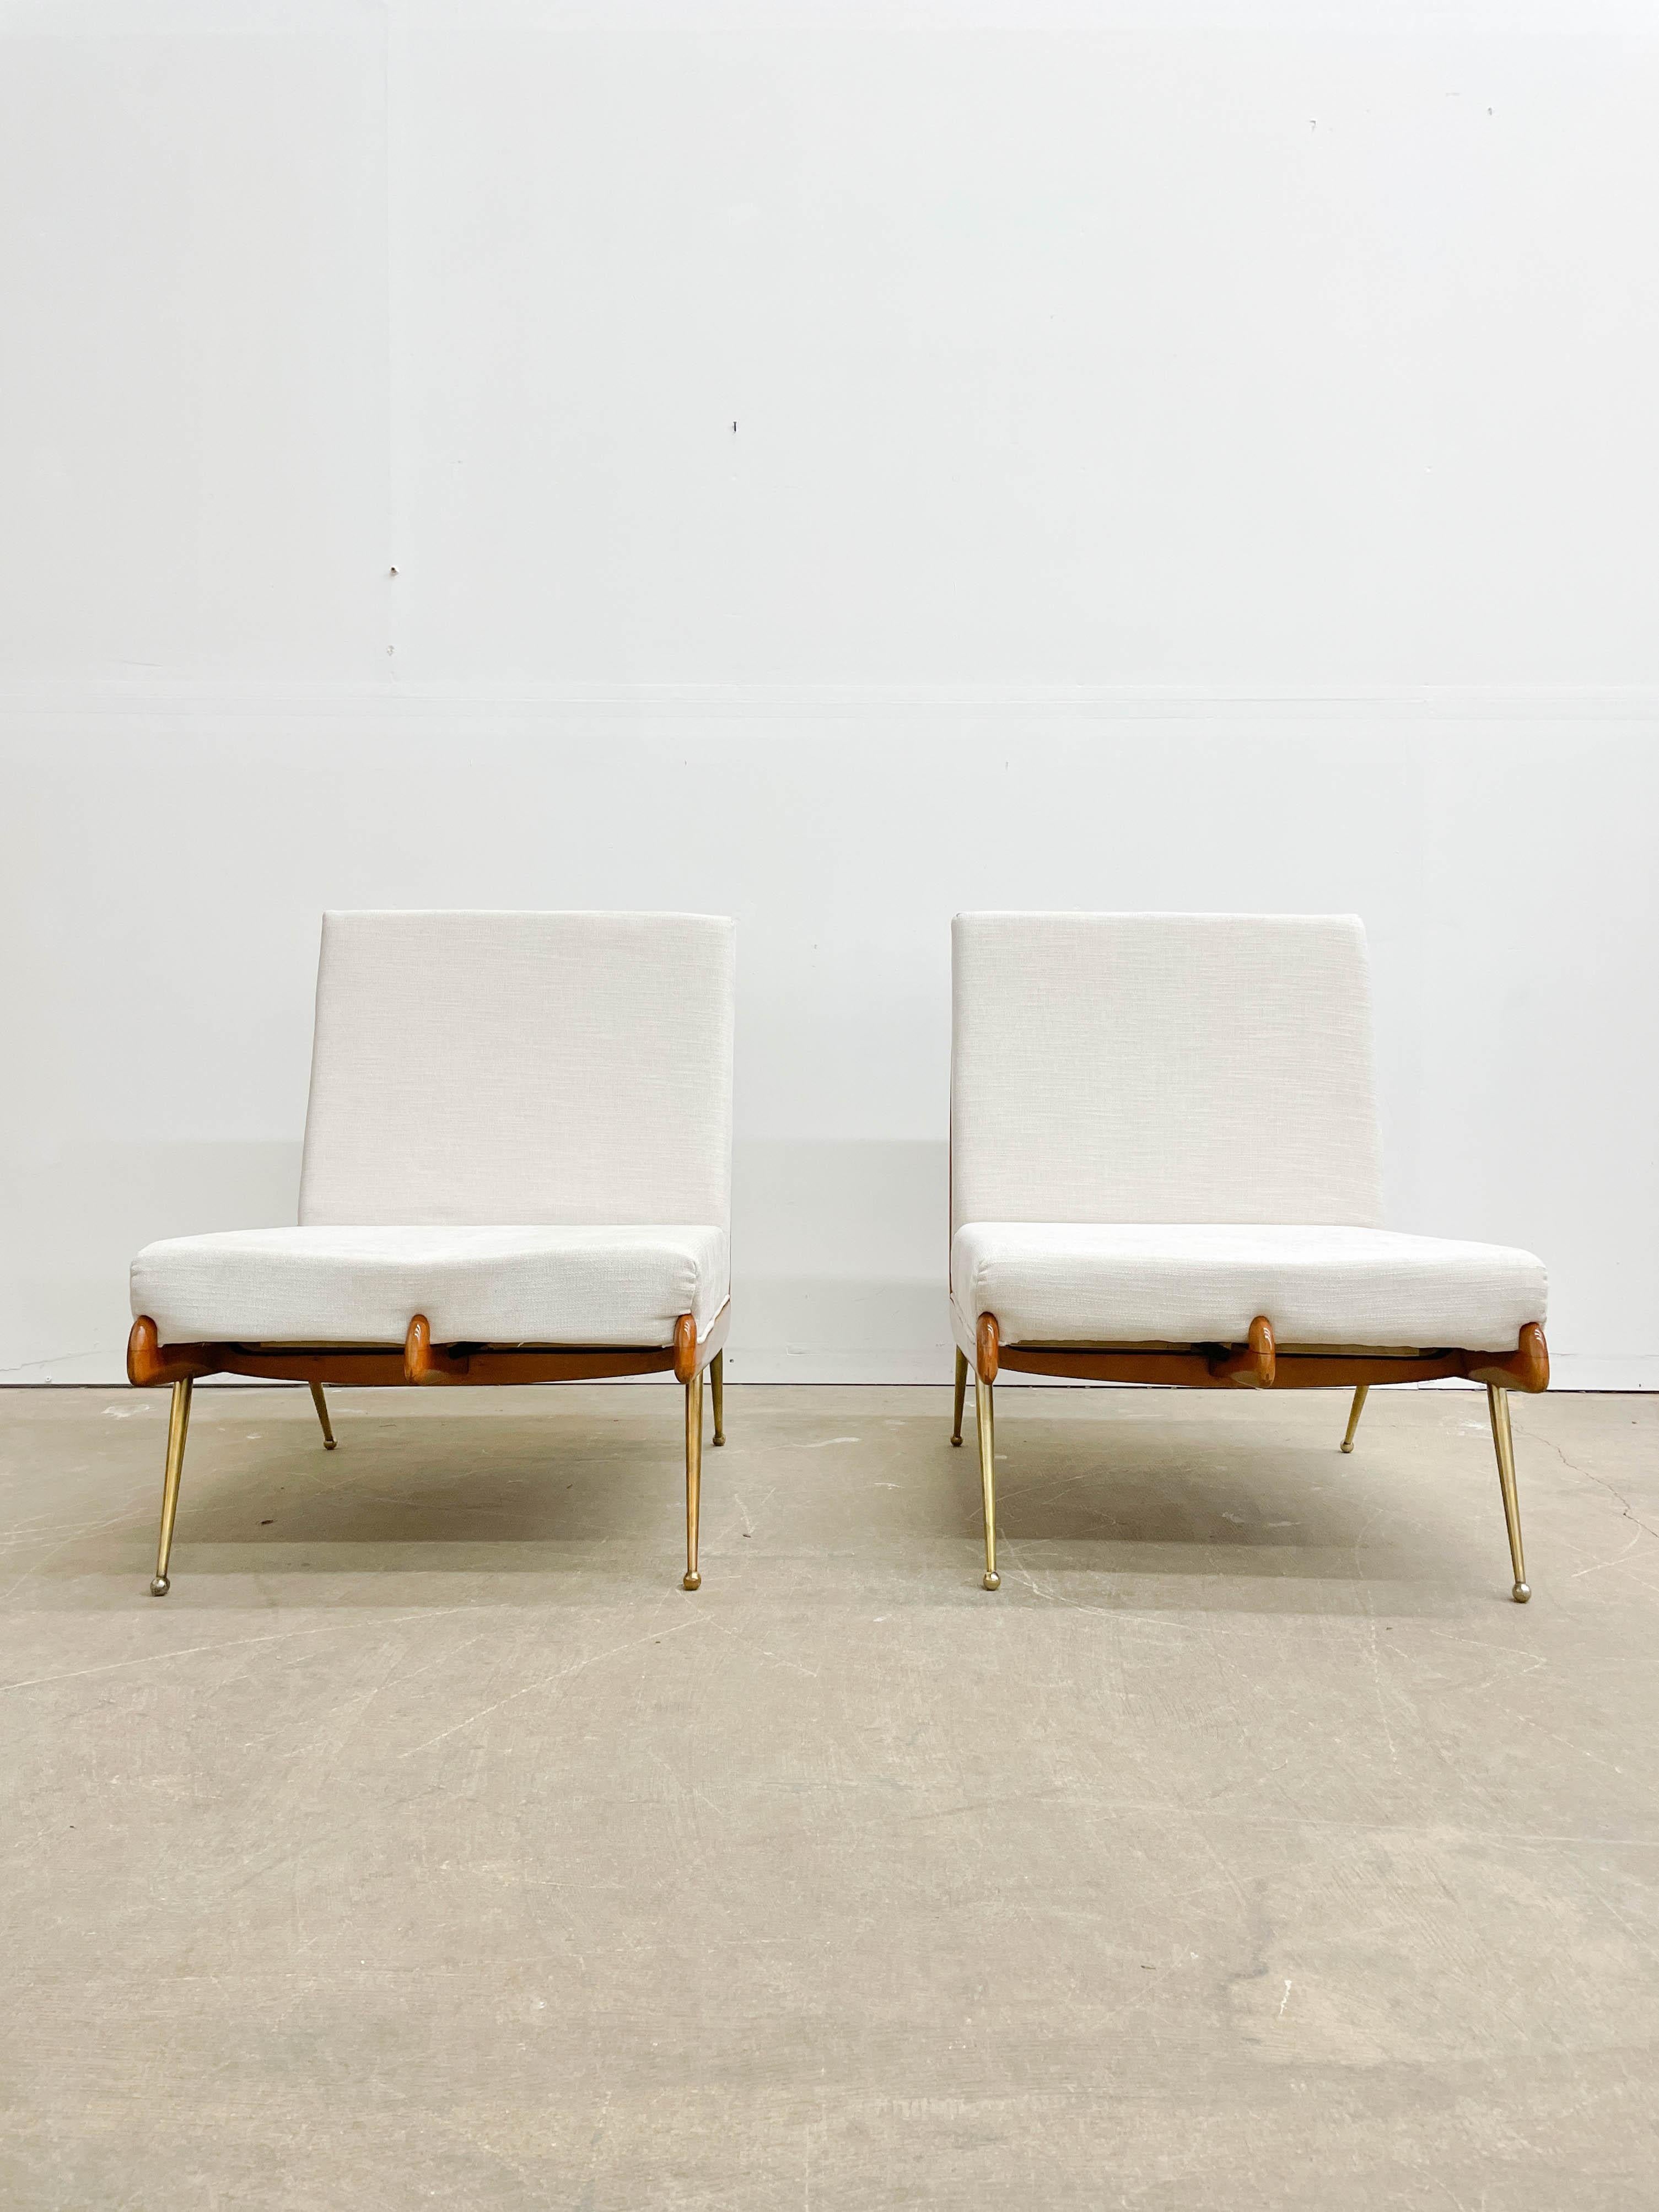 American Rare Mid Century Modern Boomerang Chairs by Artcraft / Robinson-Johnson